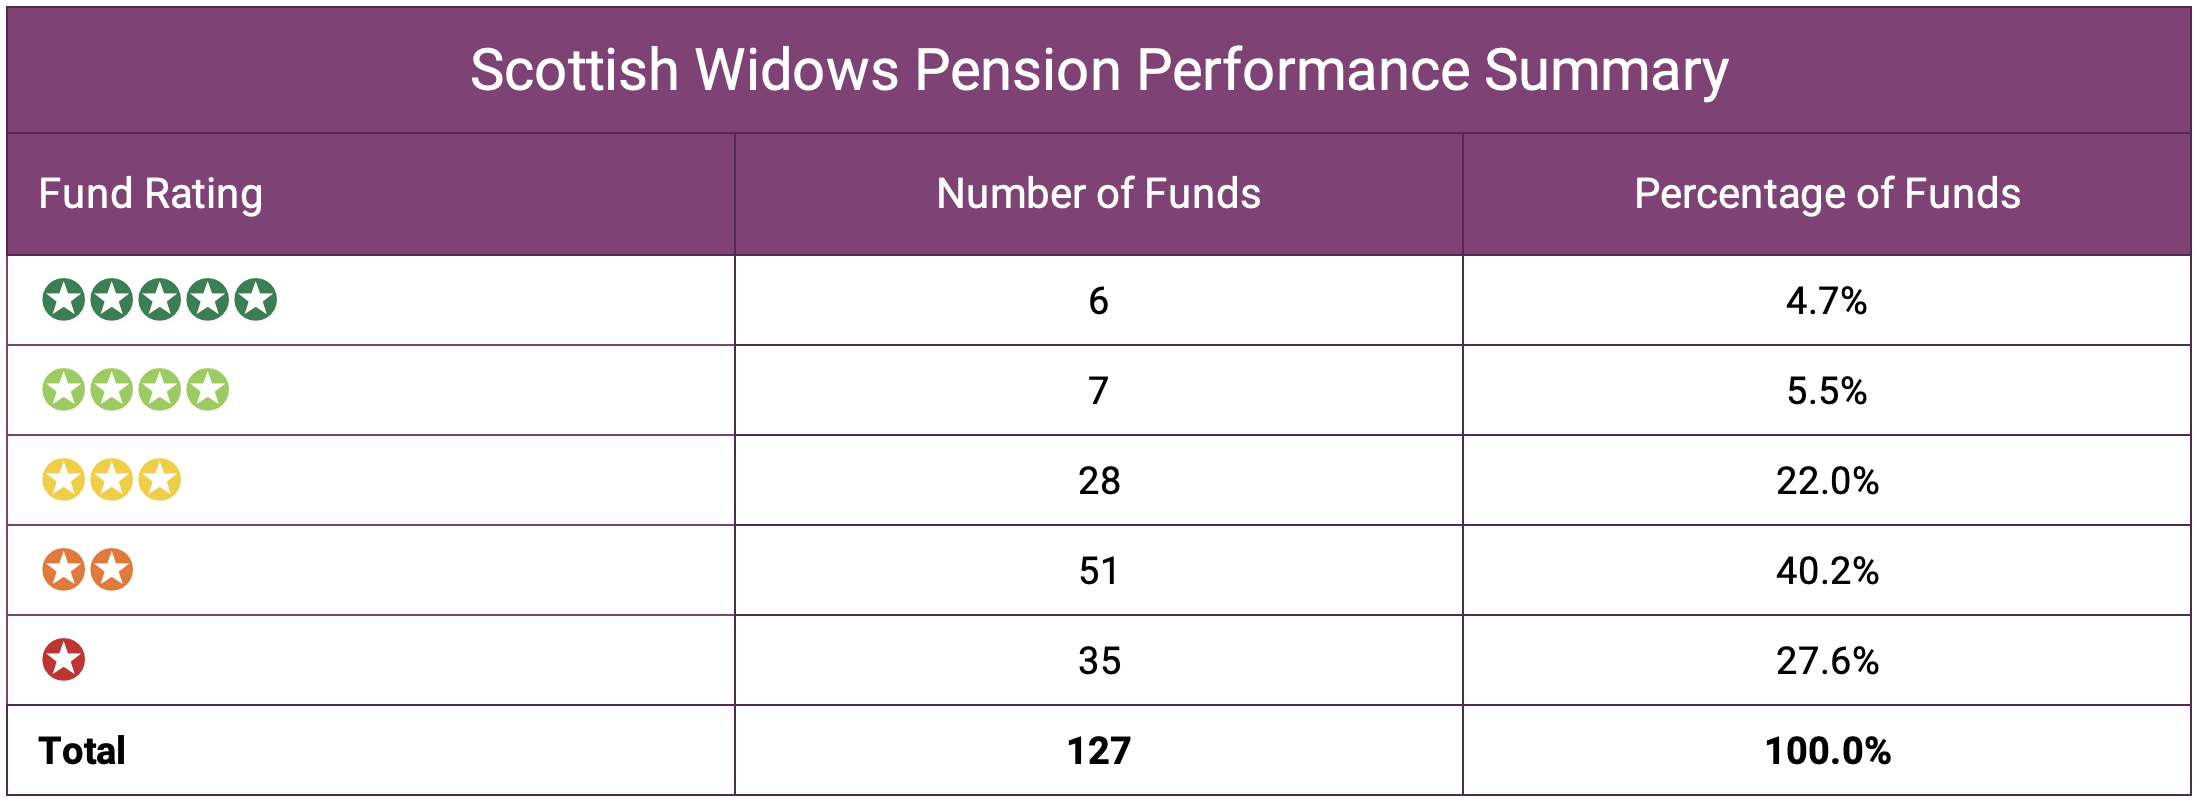 Scottish Widows Pension Performance Summary-1